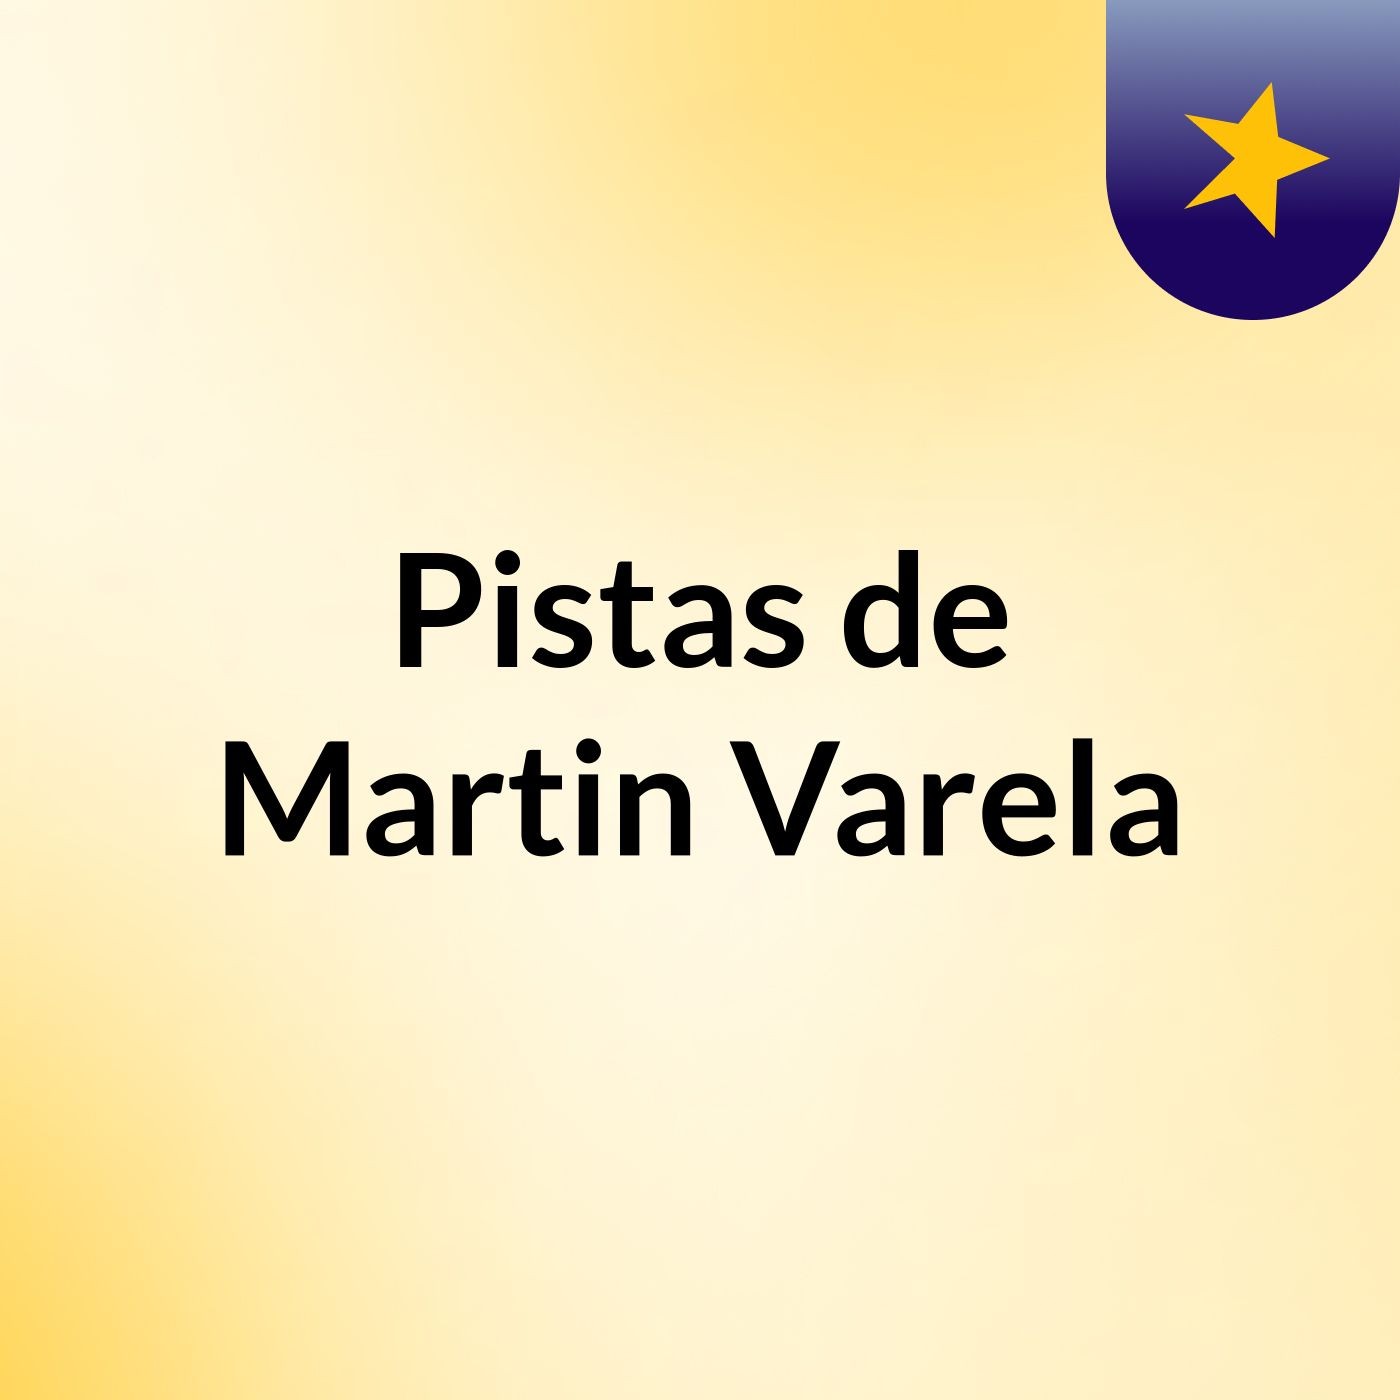 Pistas de Martin Varela